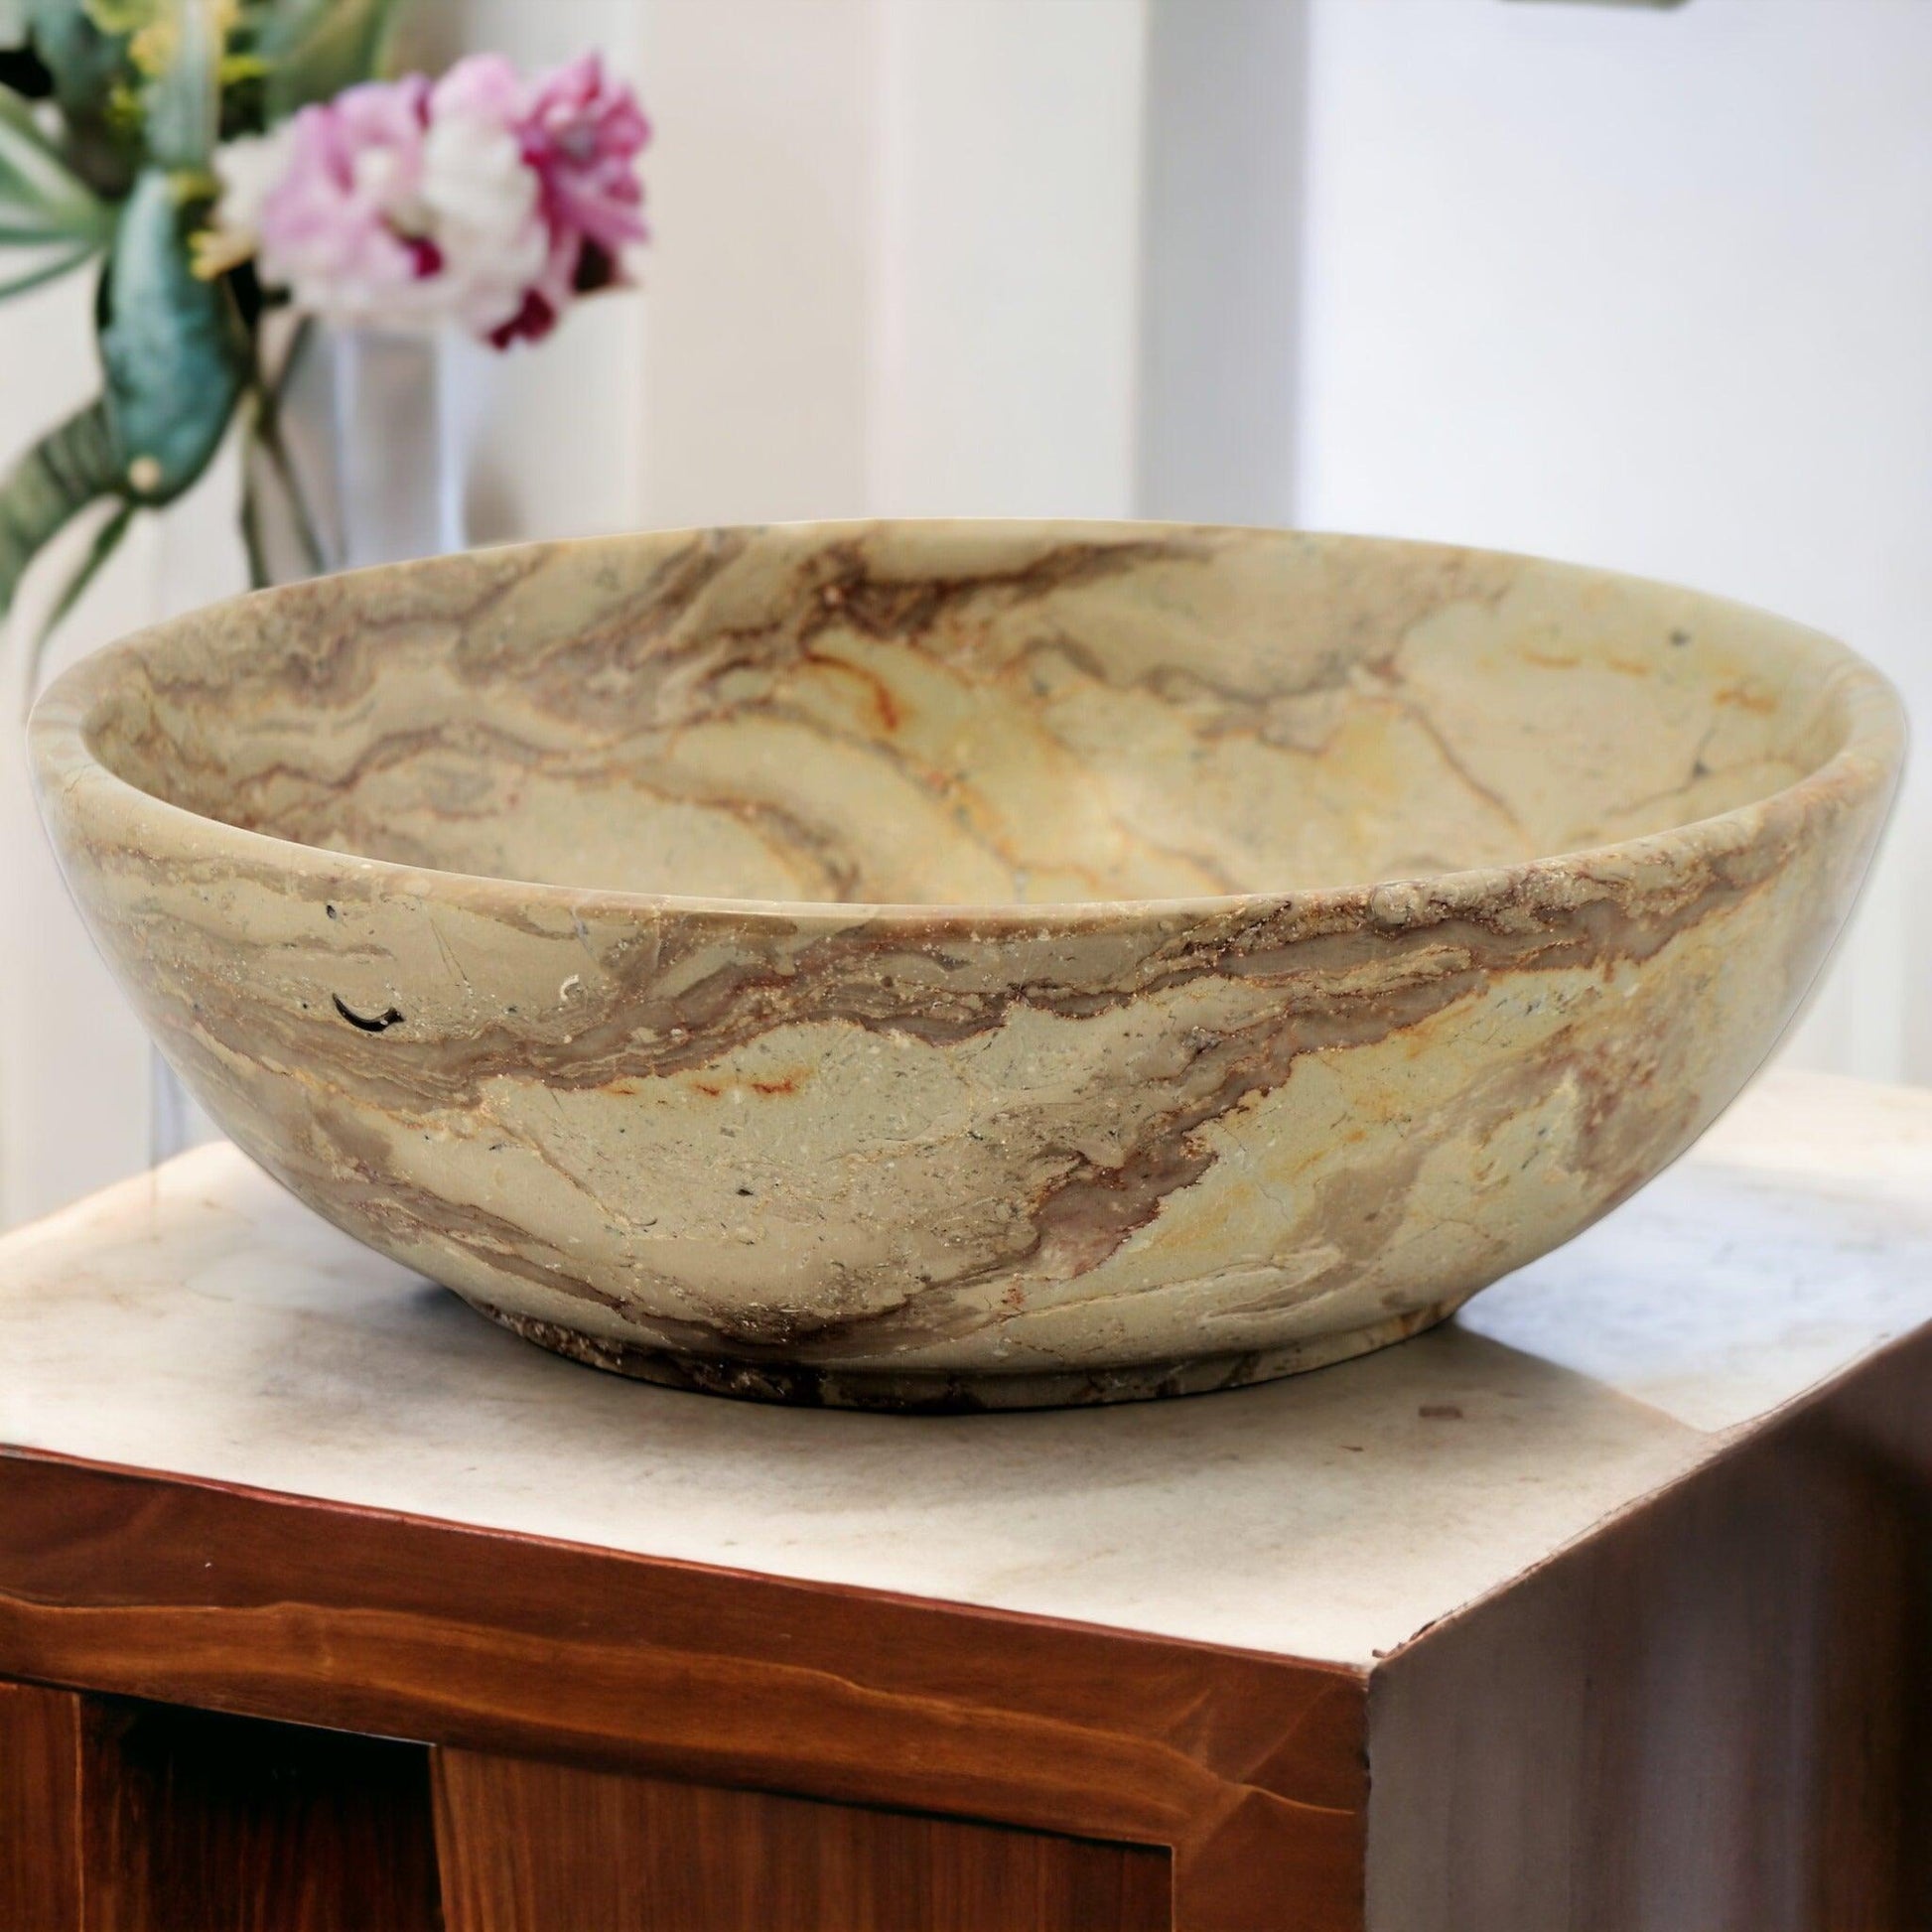 Sahara Beige Marble 12 inch Decorative Fruit Bowl - Nature Home Decor